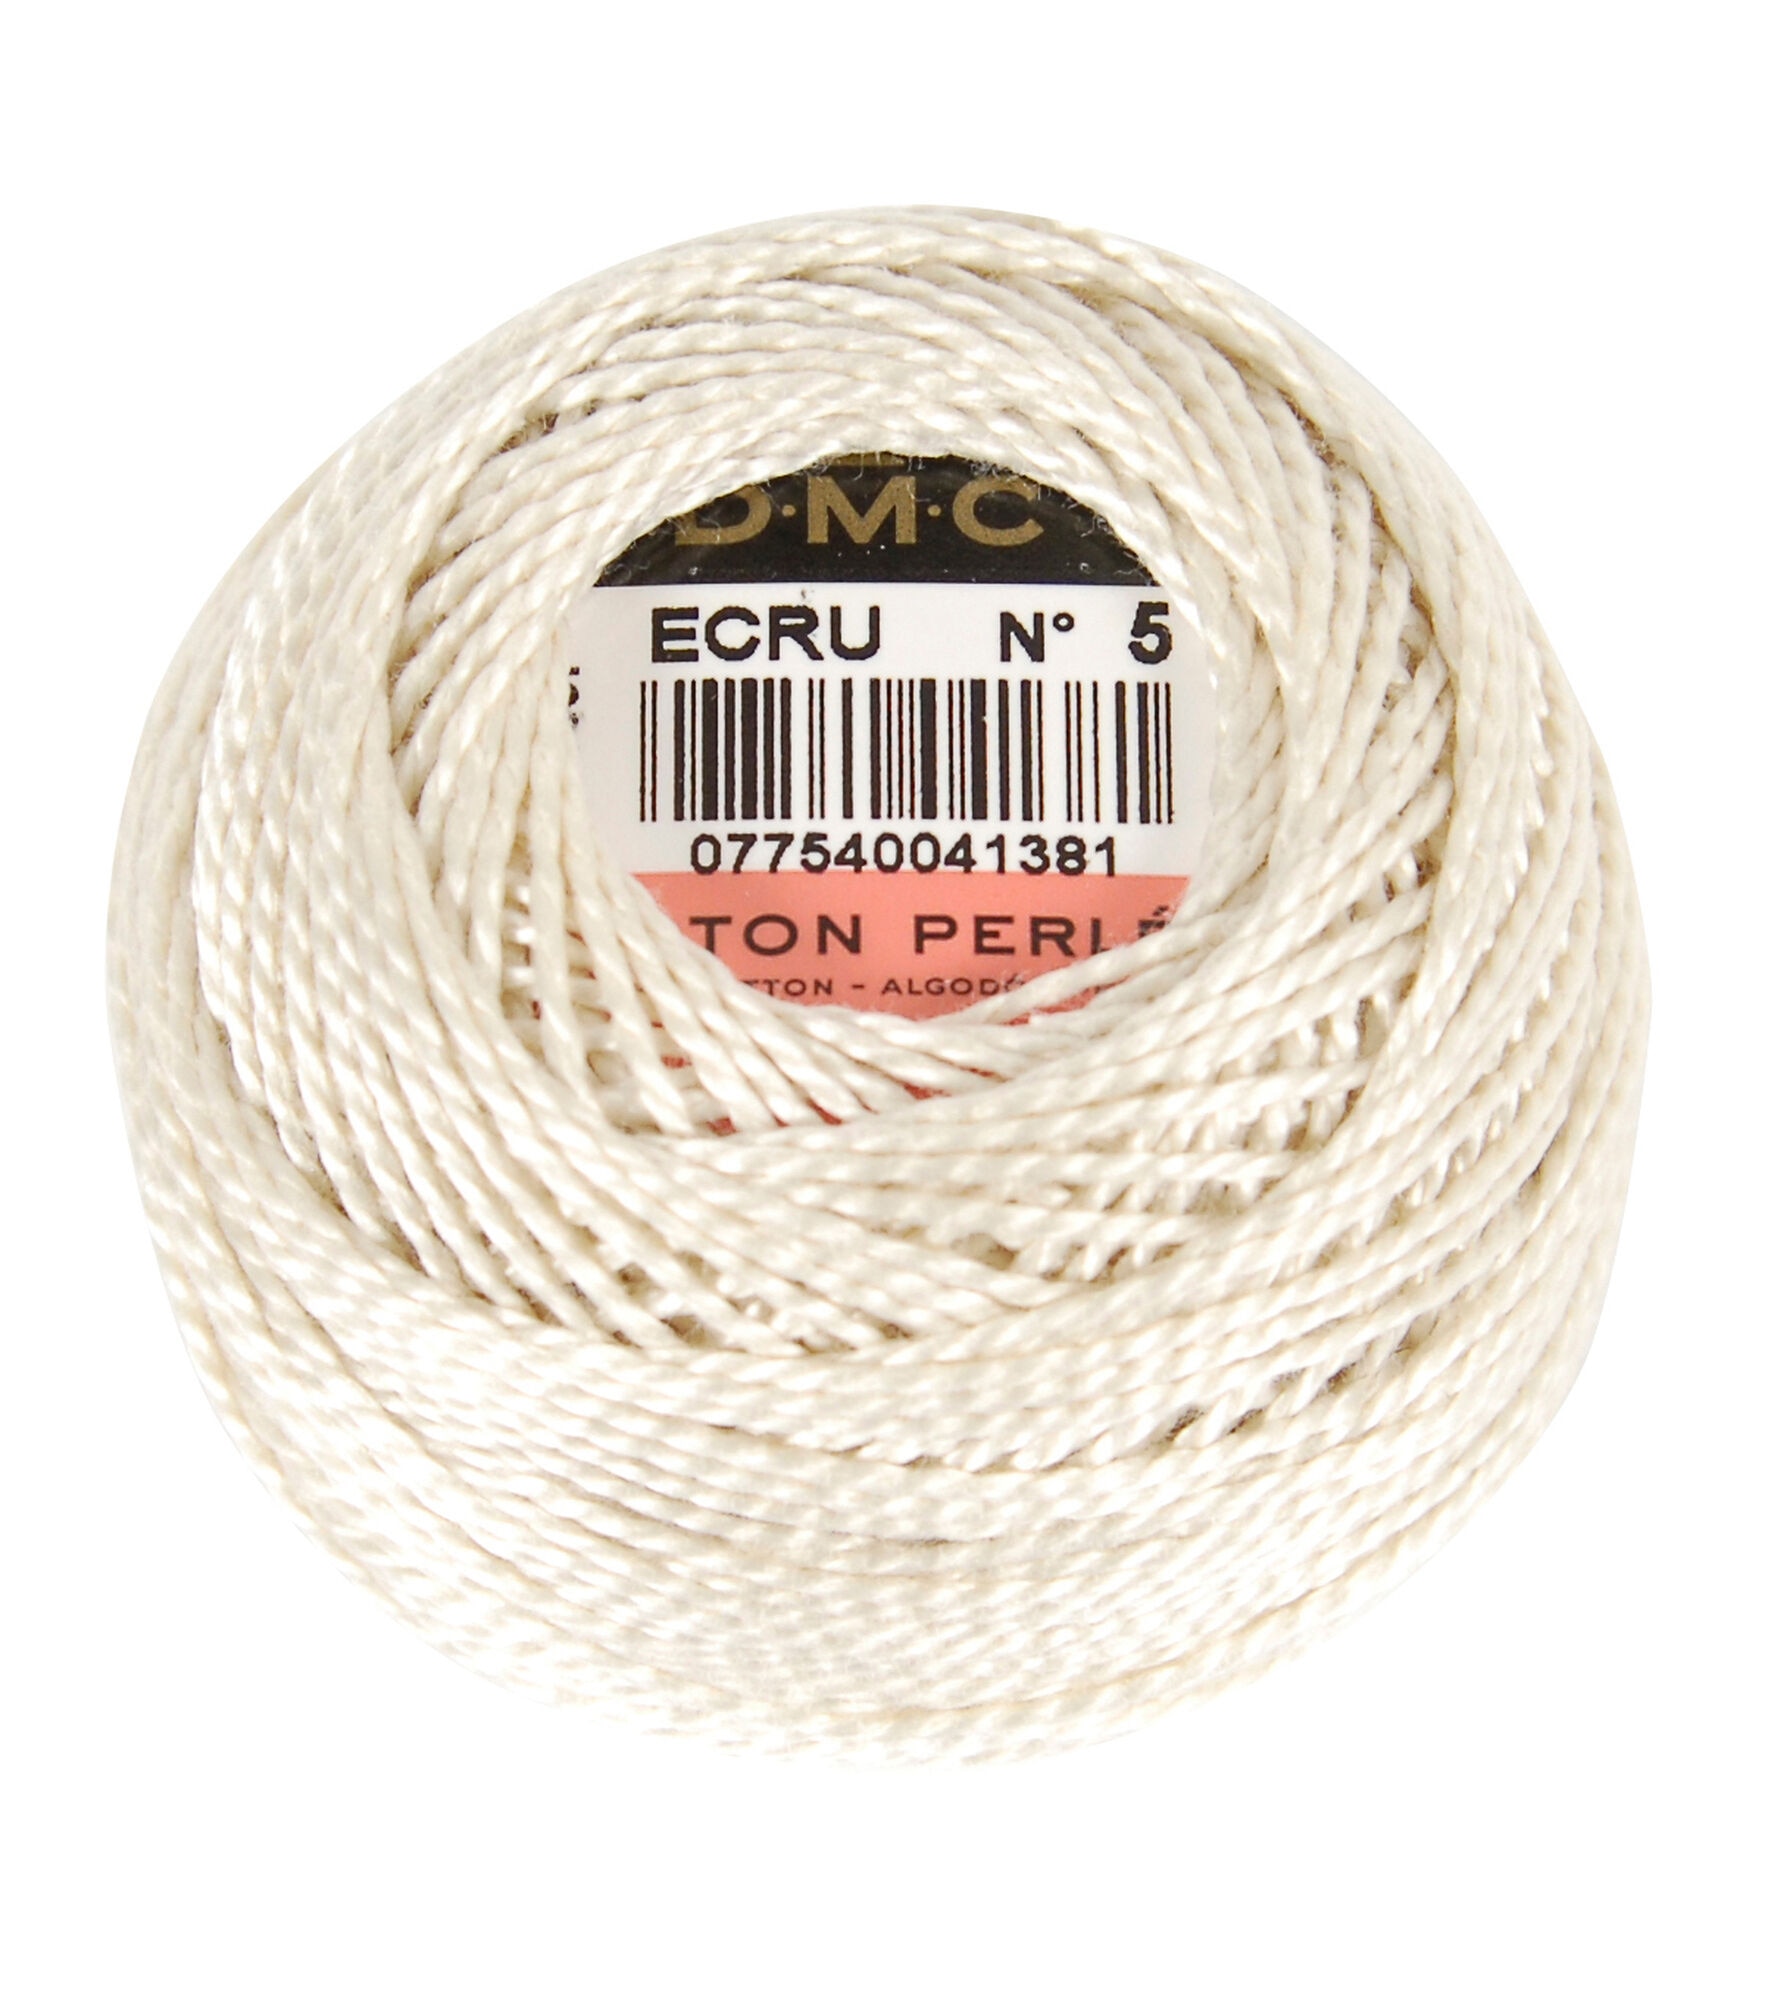 DMC 49yd Pearl Size 5 Cotton Balls Thread, Ecru, hi-res